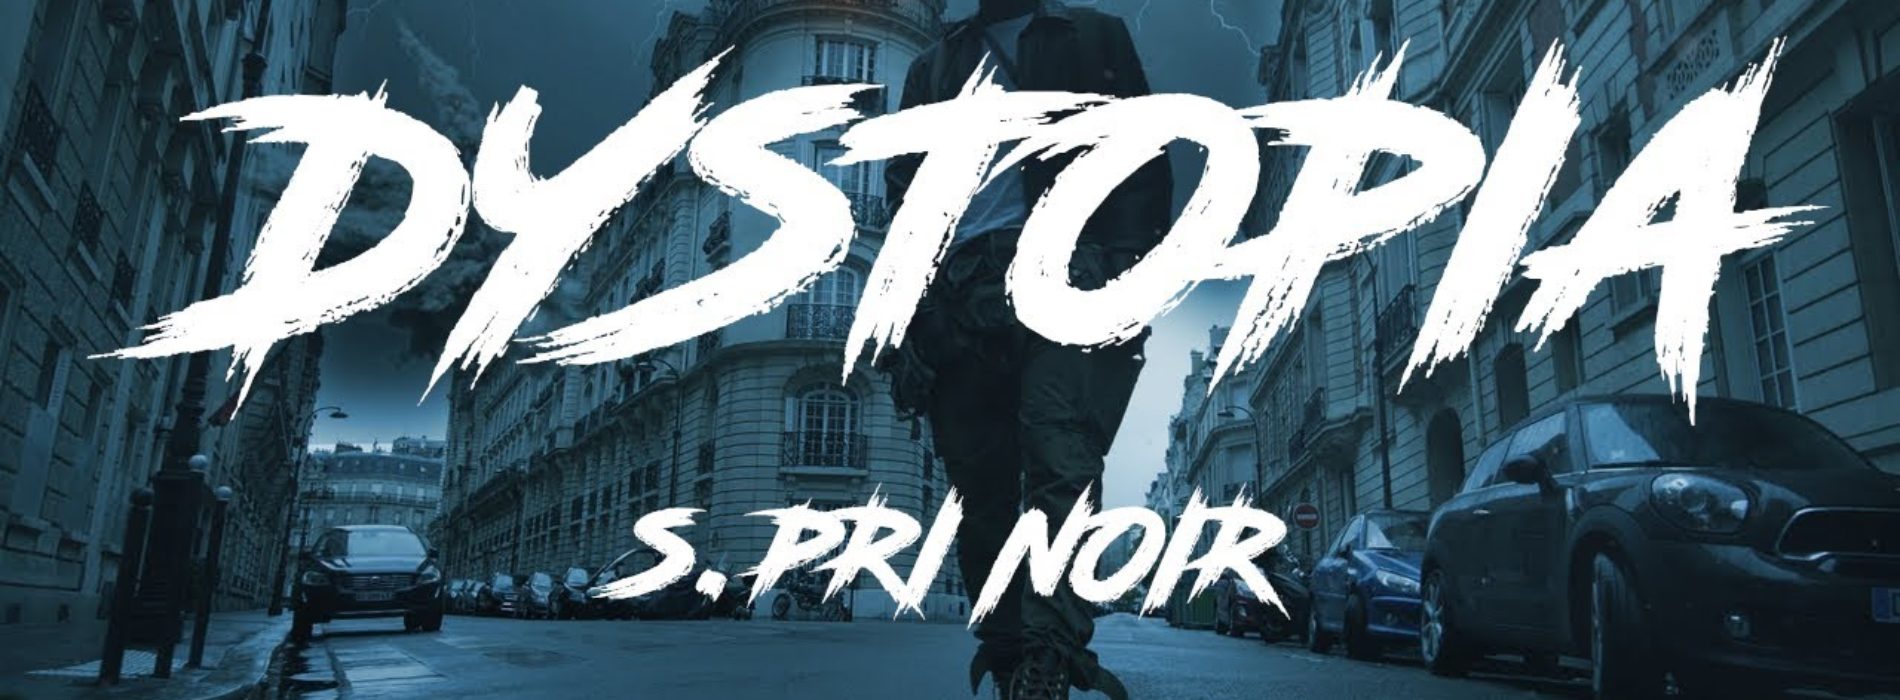 S.Pri Noir – Dystopia (Clip Officiel) – Janvier 2020